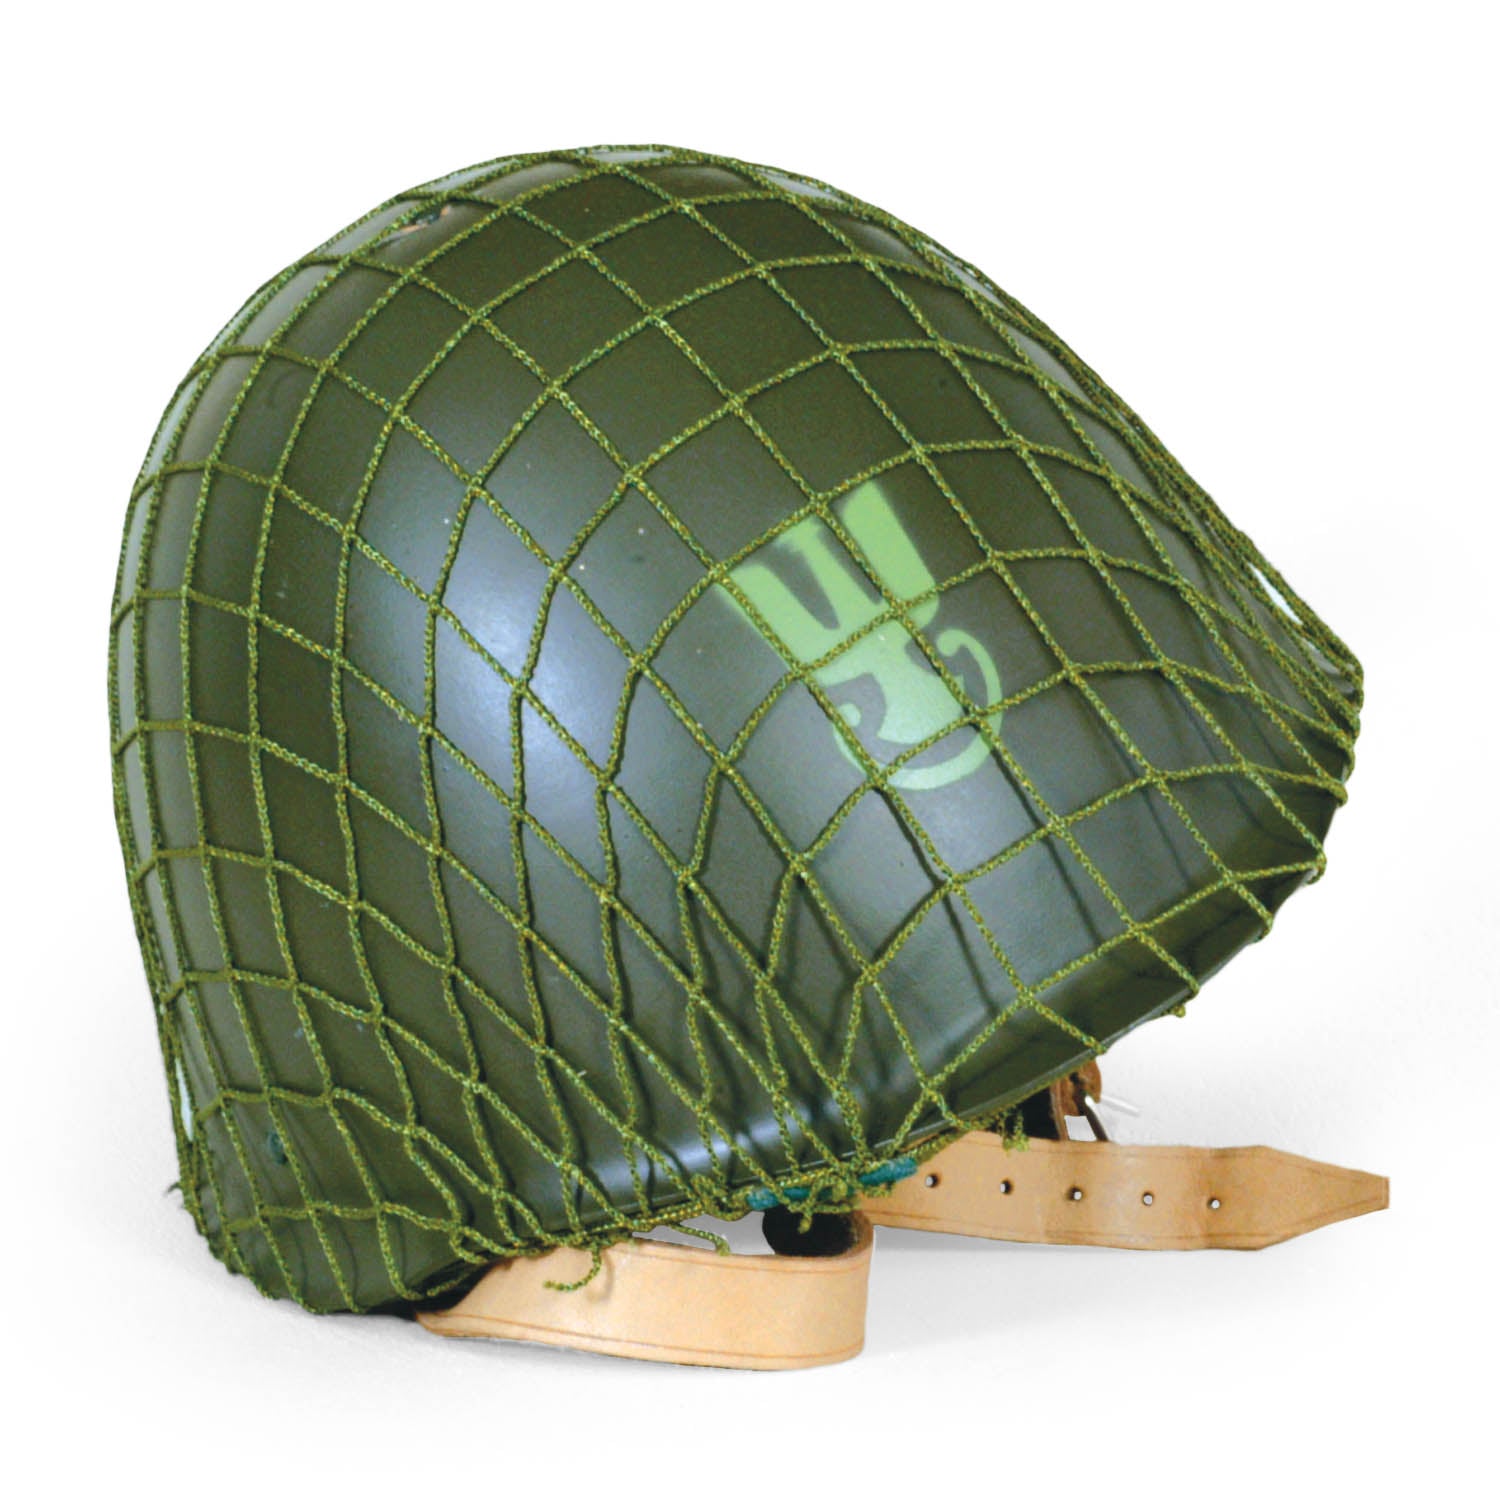 Warsaw Pact Polish Navy or Army Helmet model WZ67